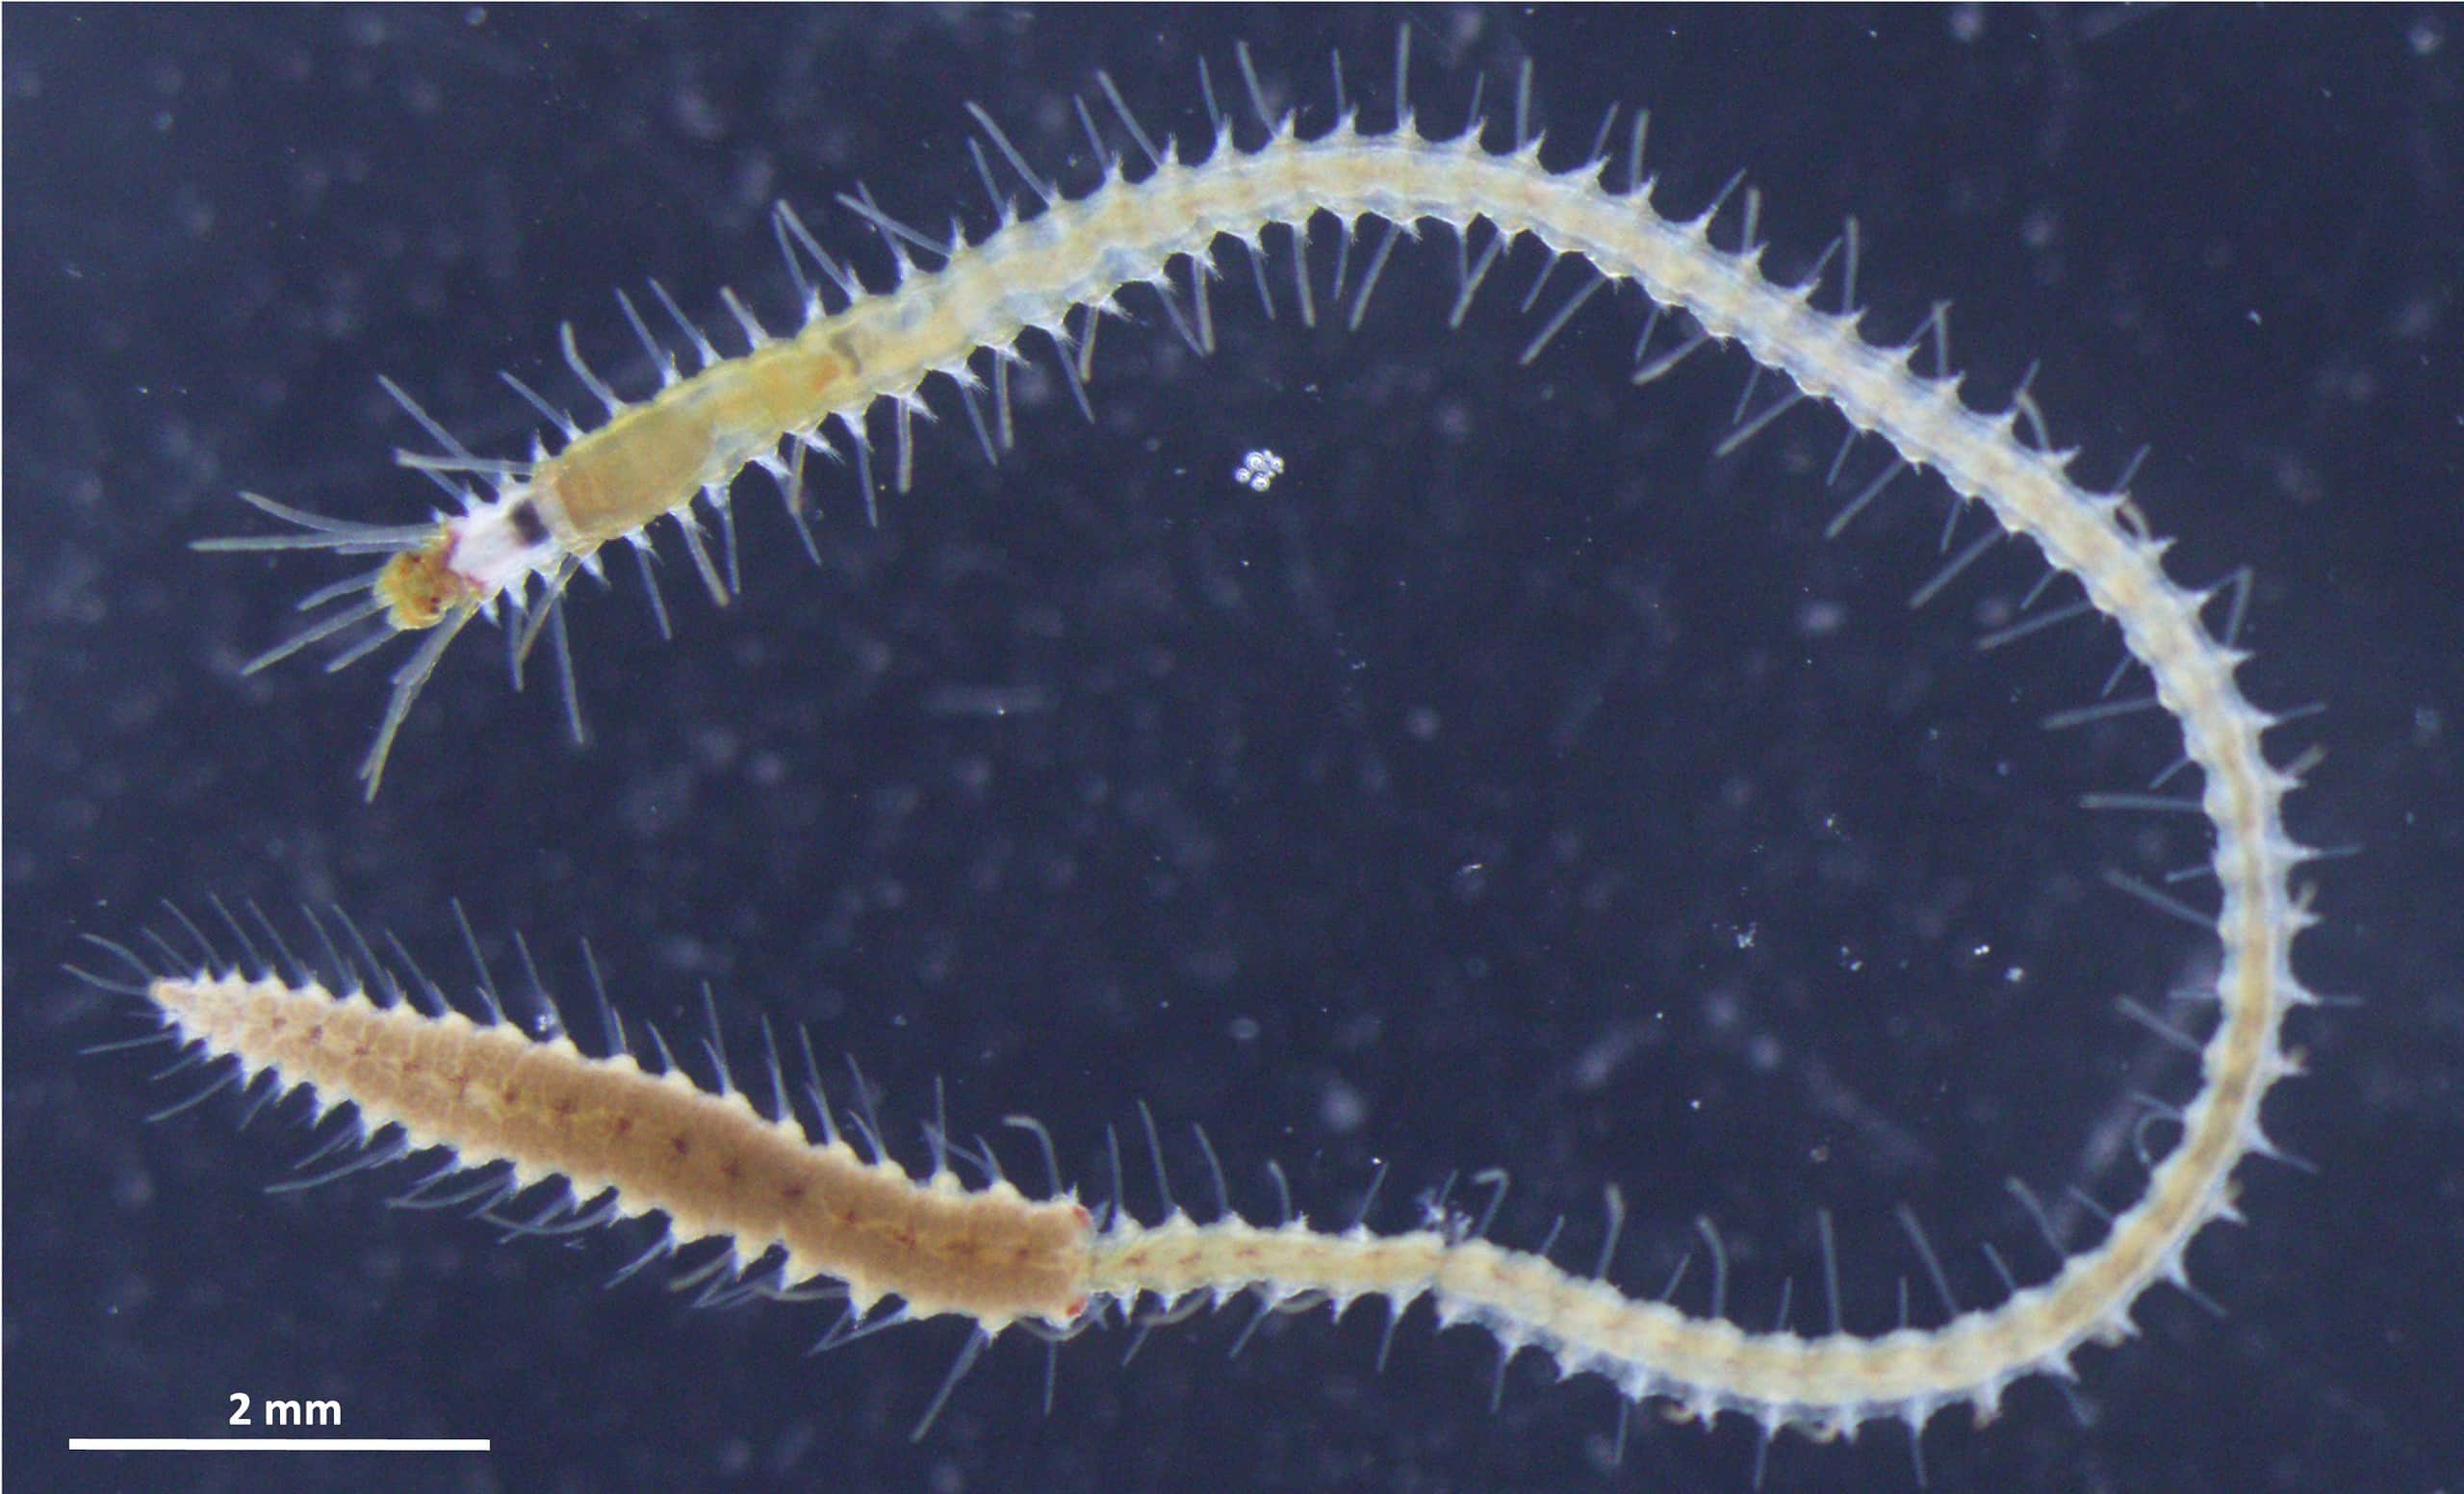 The Japanese sea worm Megasyllis nipponica